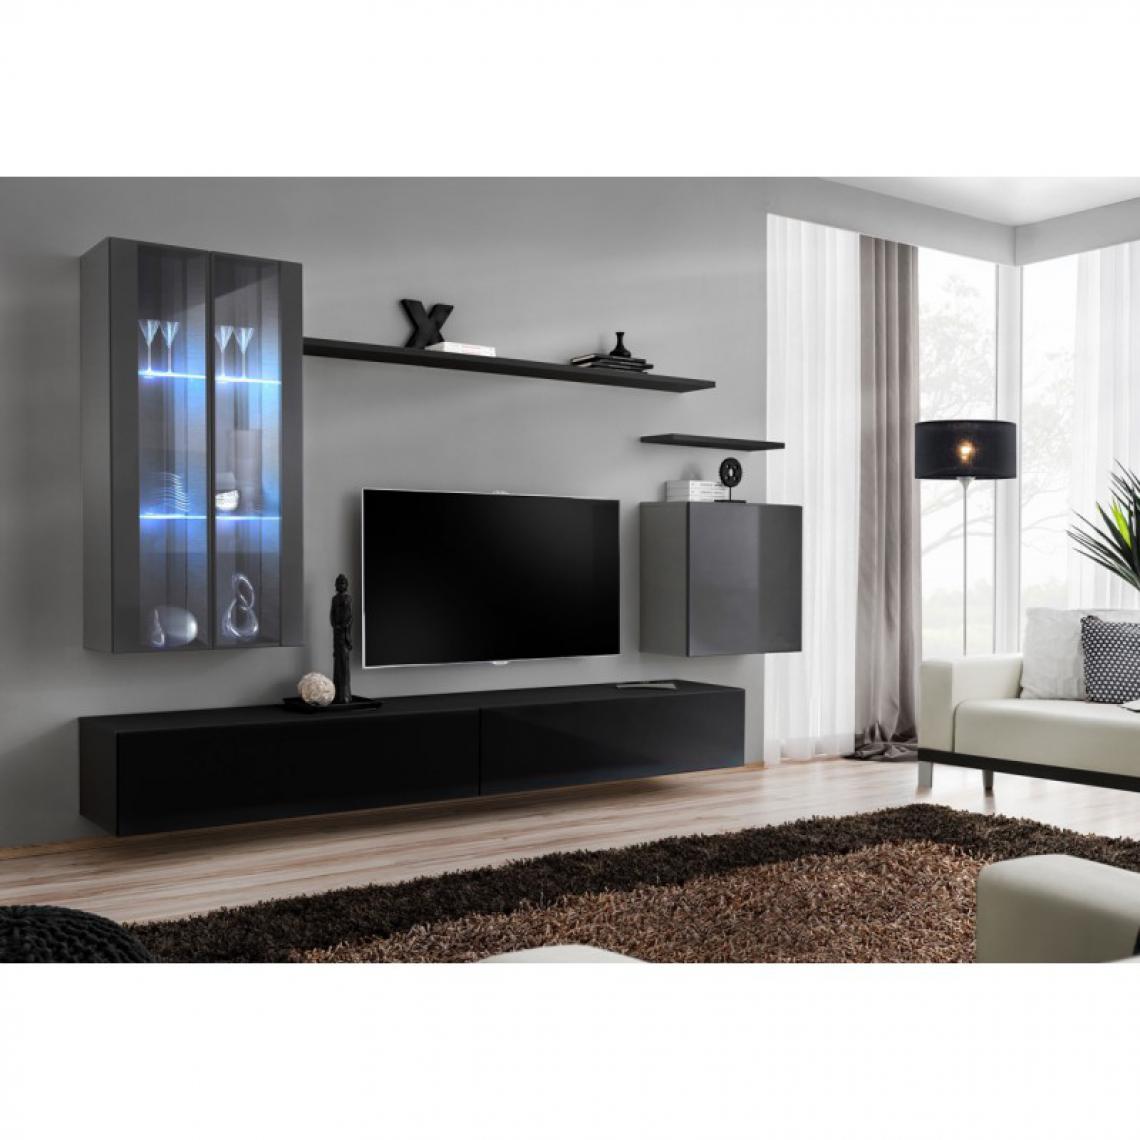 Ac-Deco - Meuble TV Mural Design Switch XII 270cm Gris & Noir - Meubles TV, Hi-Fi